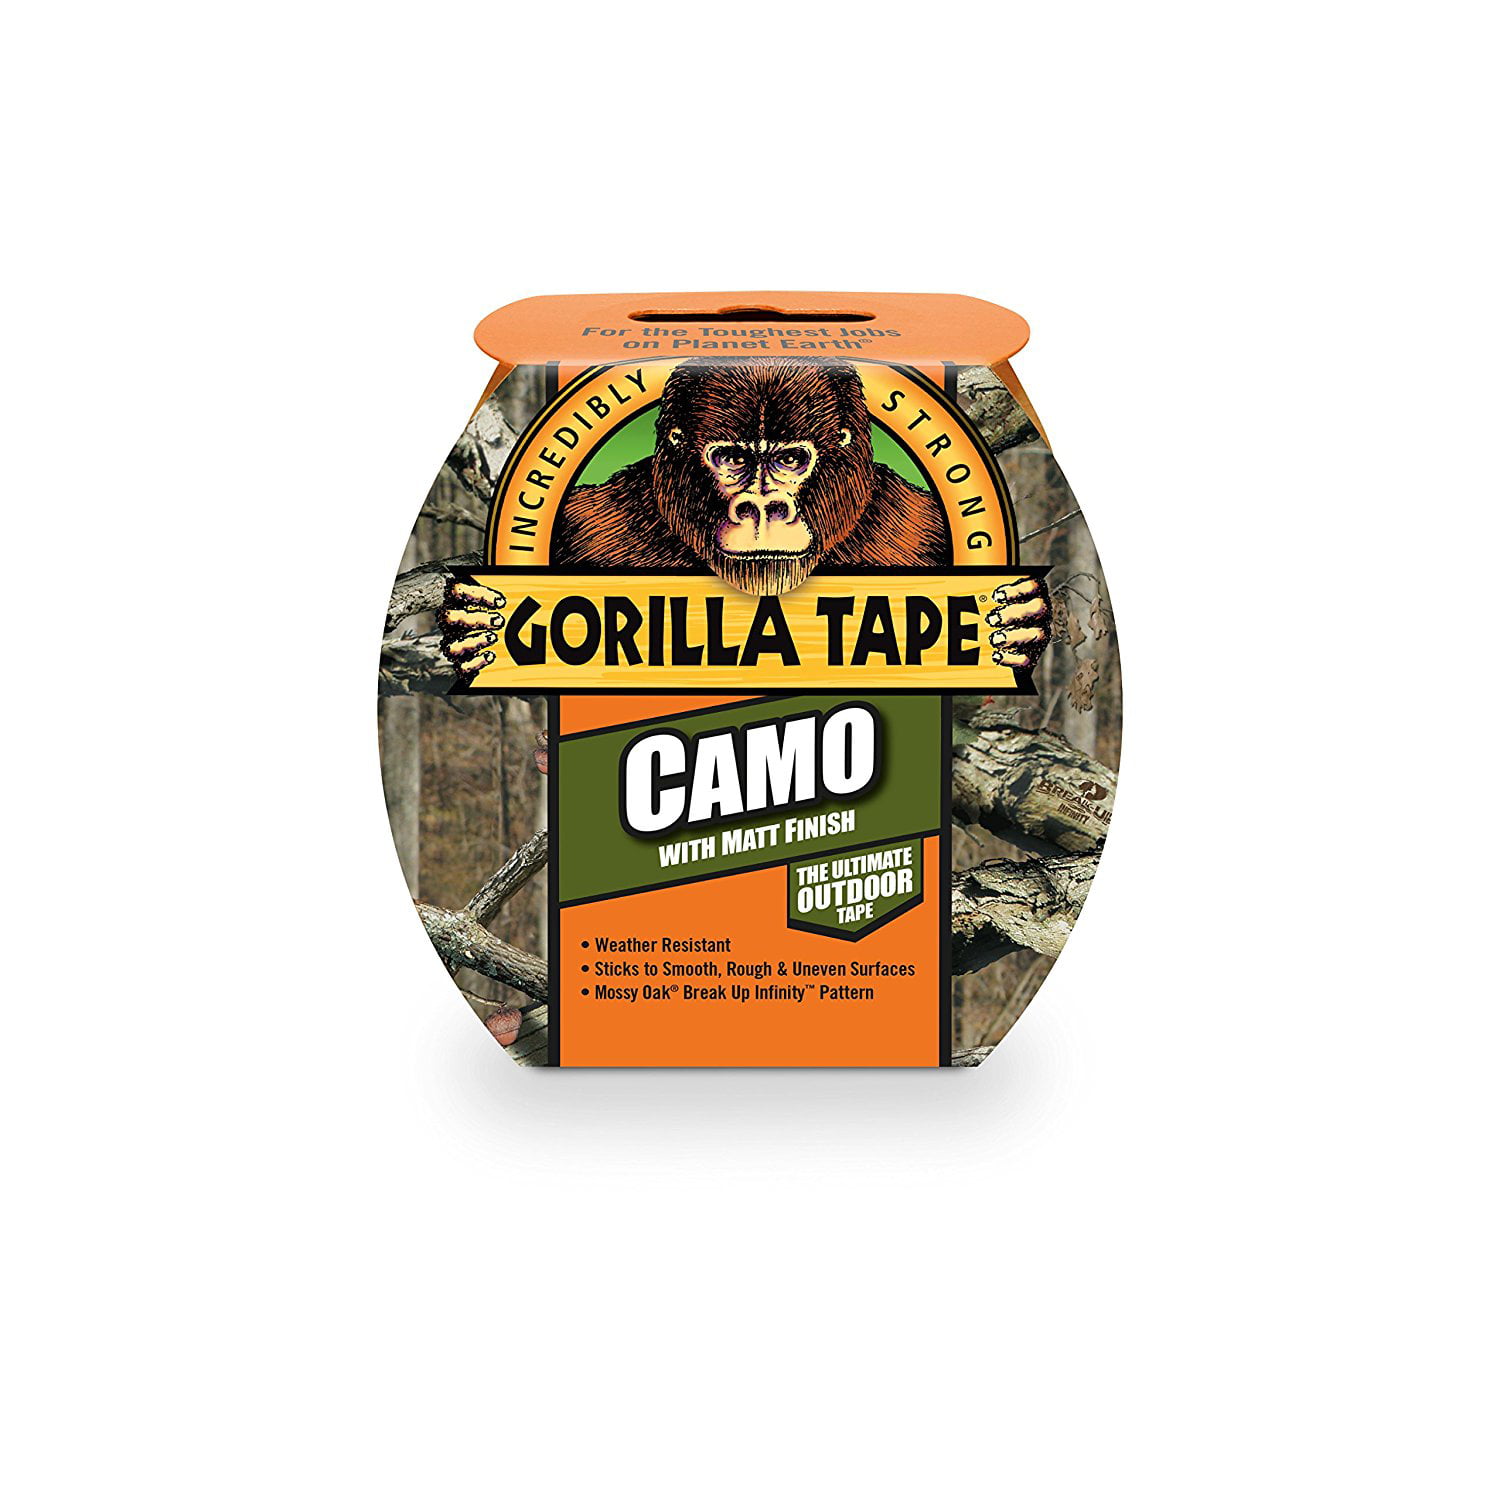 Gorilla Camo Duct Tape Mossy Oak, 1.88 x 9 yd Pack of 1 -1 